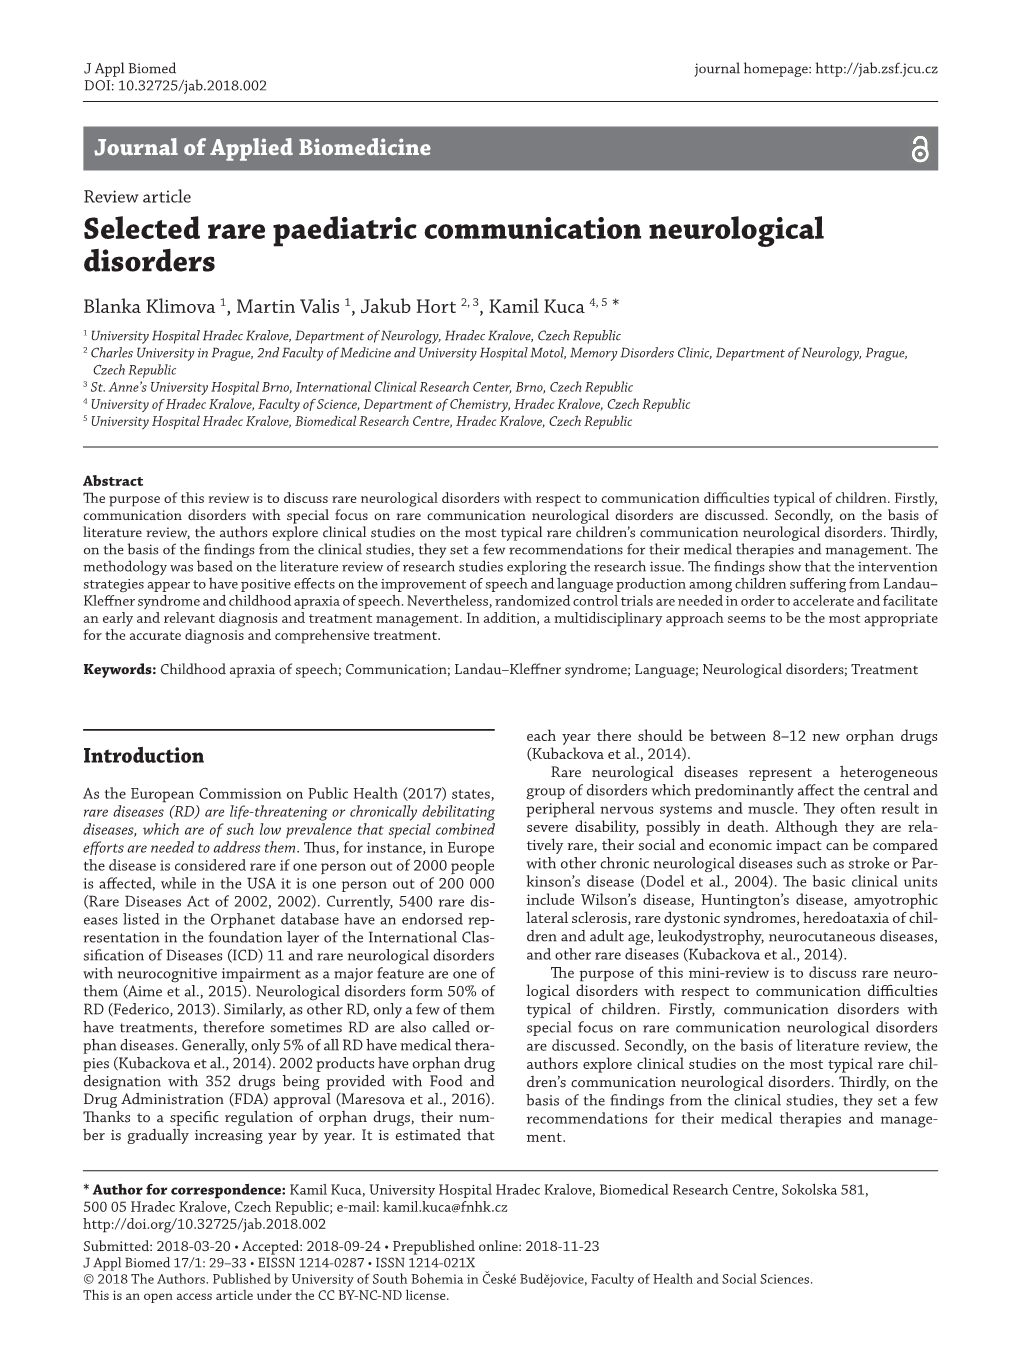 Selected Rare Paediatric Communication Neurological